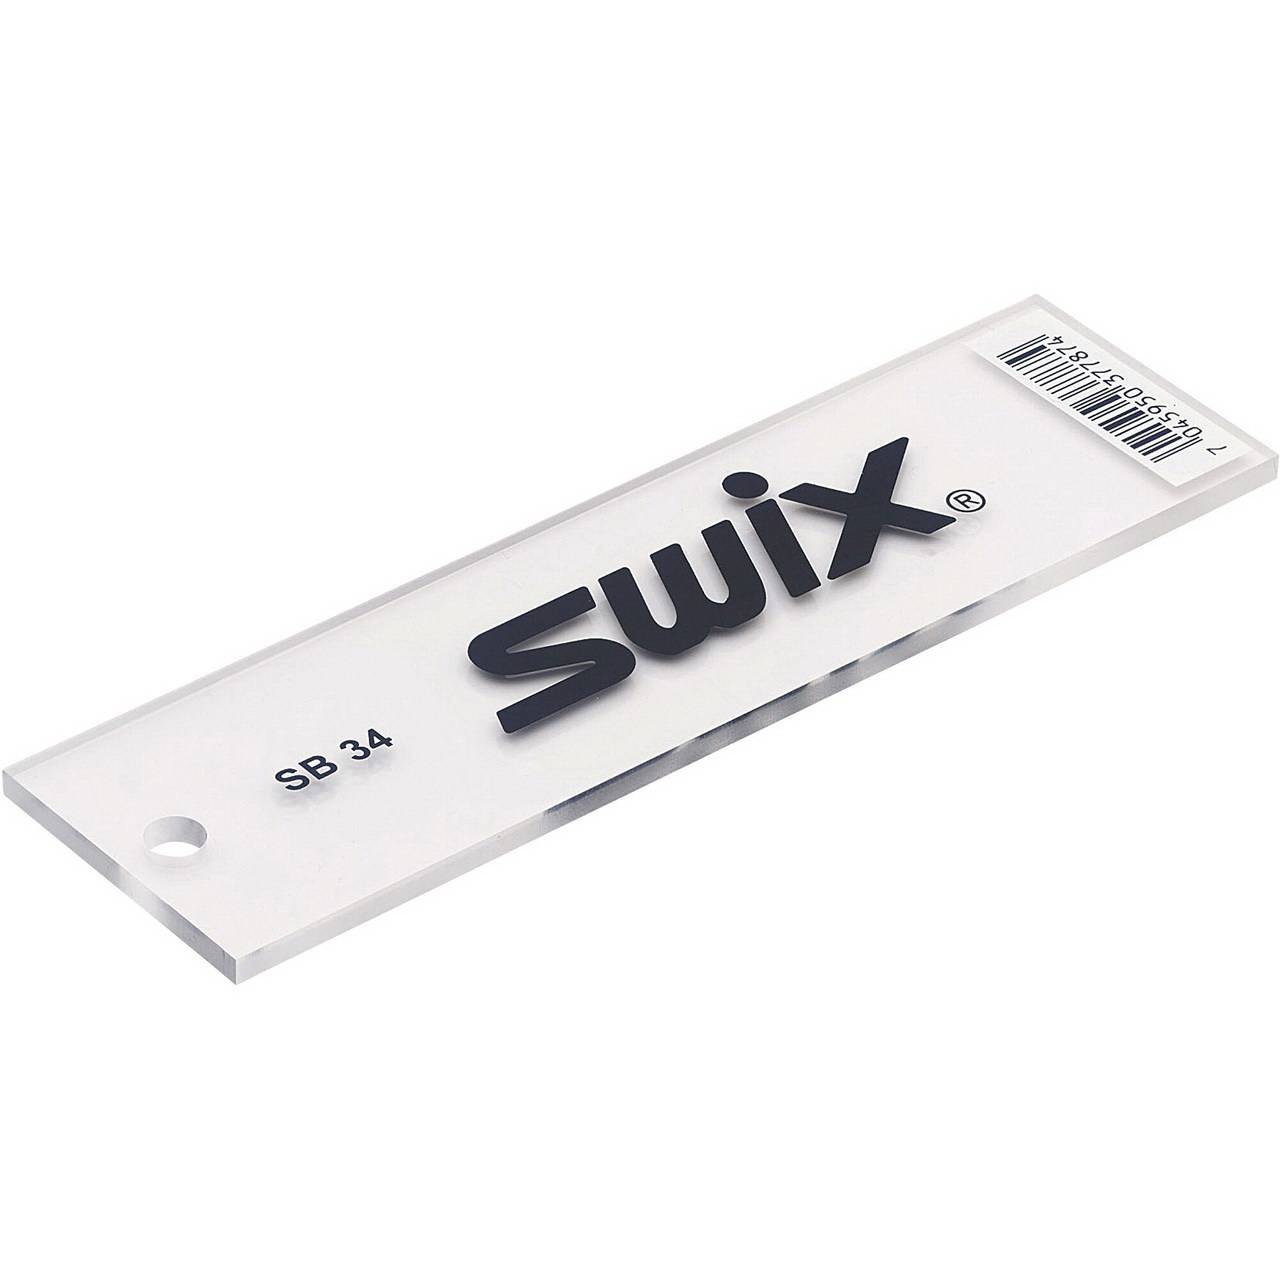 Swix SB034D